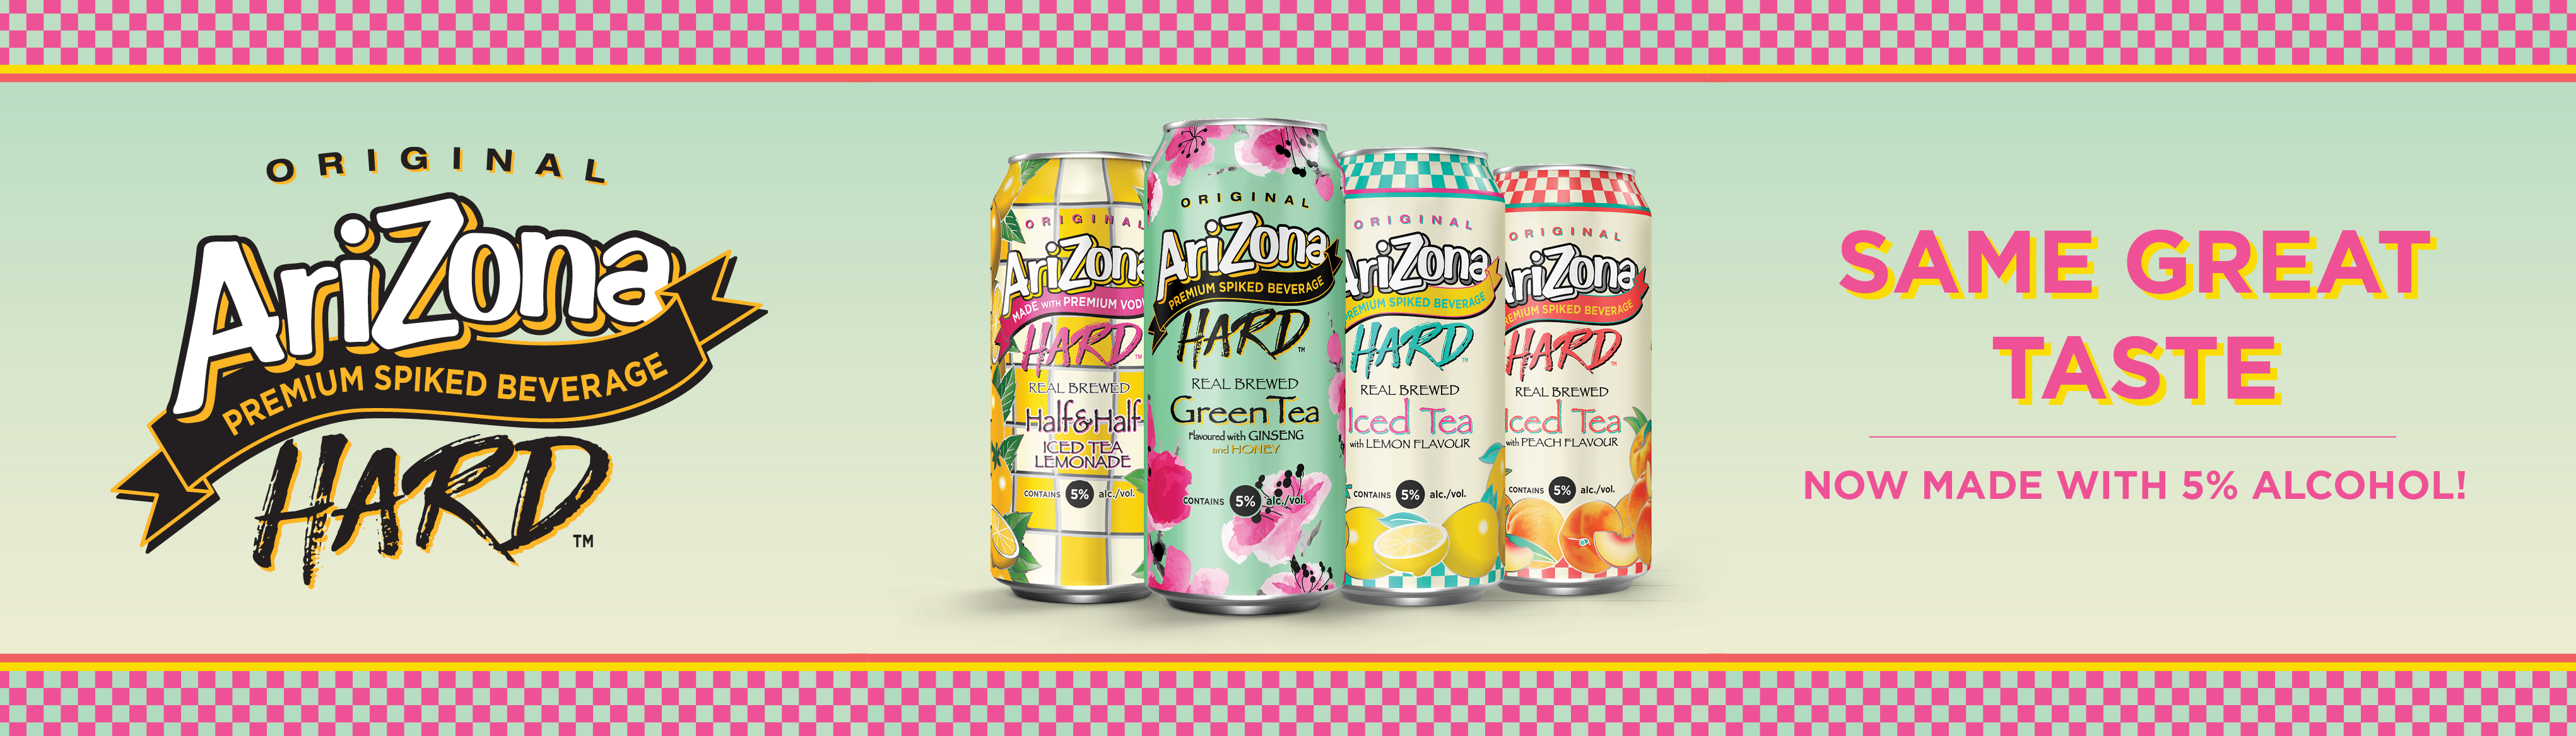 Original Arizona Hard Premium Spiked Beverage: Same great taste, now with 5% alcohol!